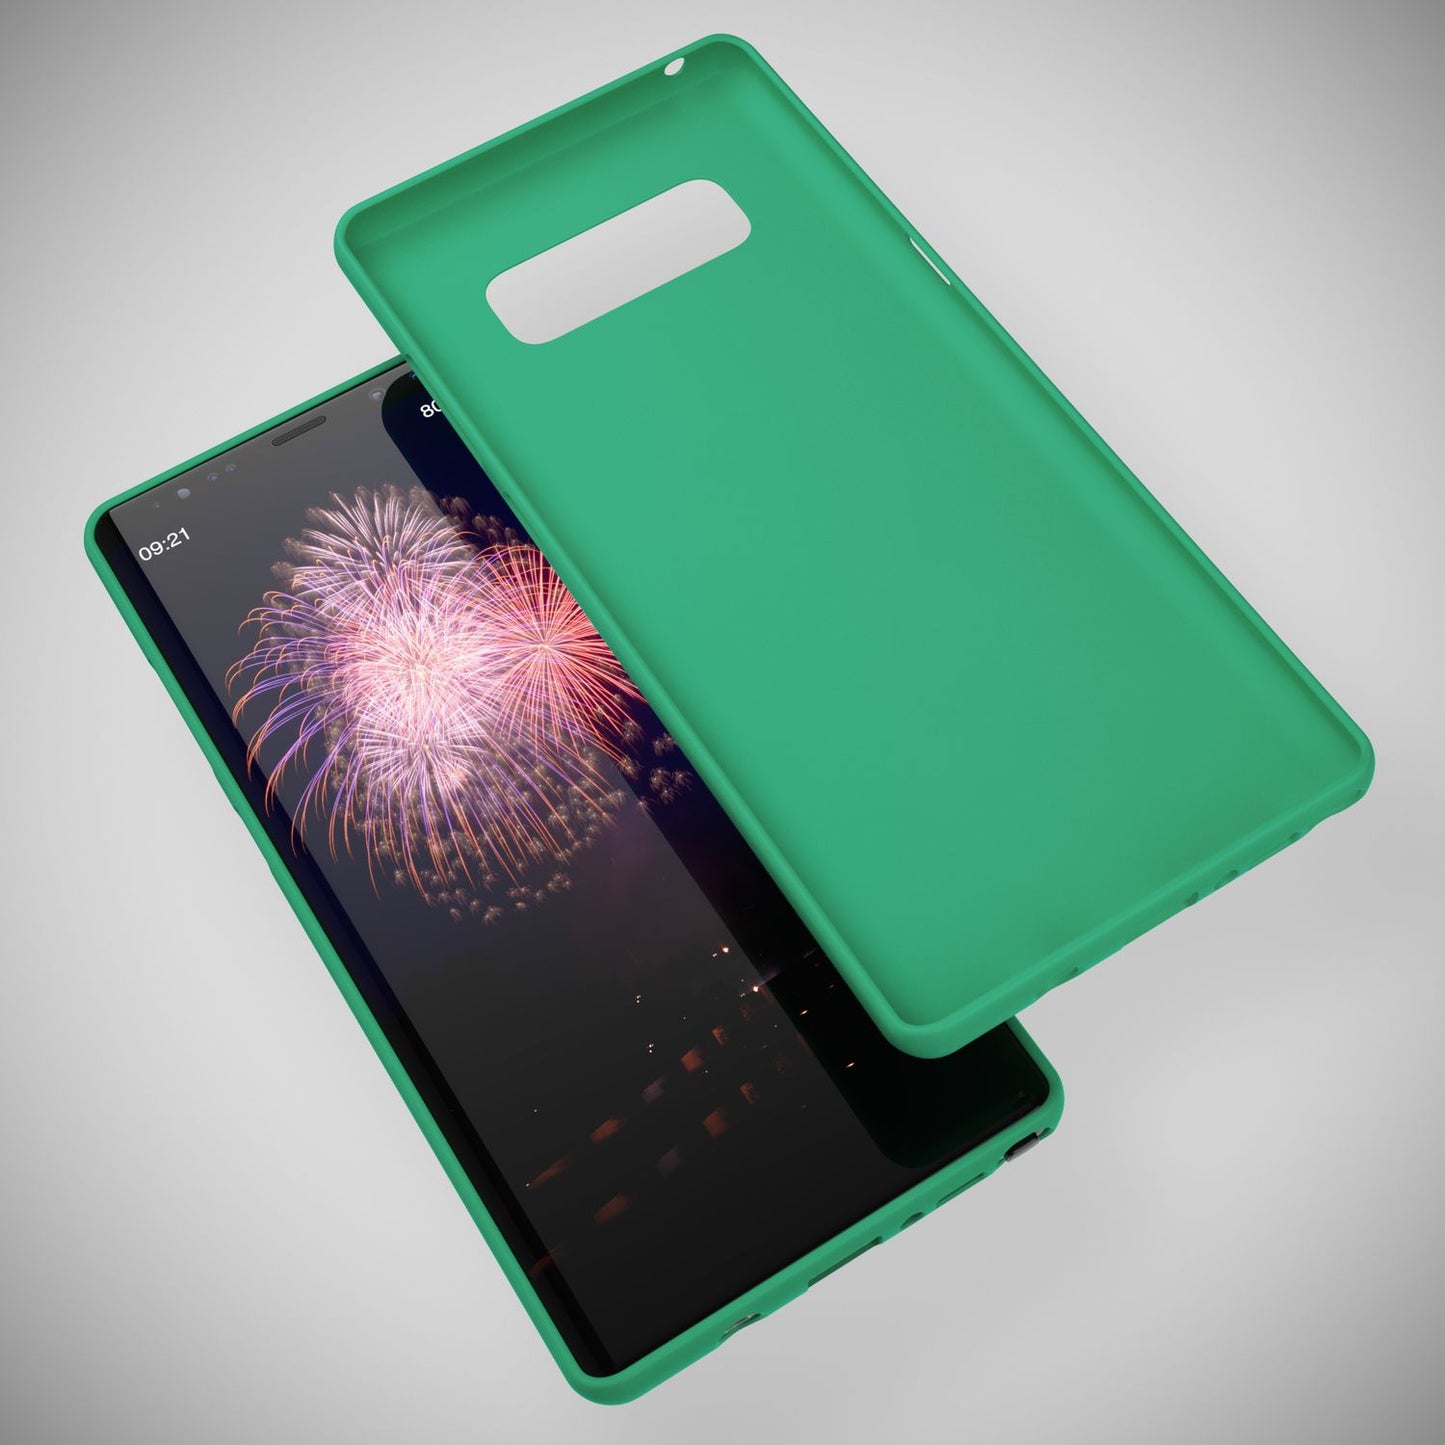 Samsung Galaxy Note 8 Handy Hülle von NALIA, Ultra Slim TPU Silikon Neon Case